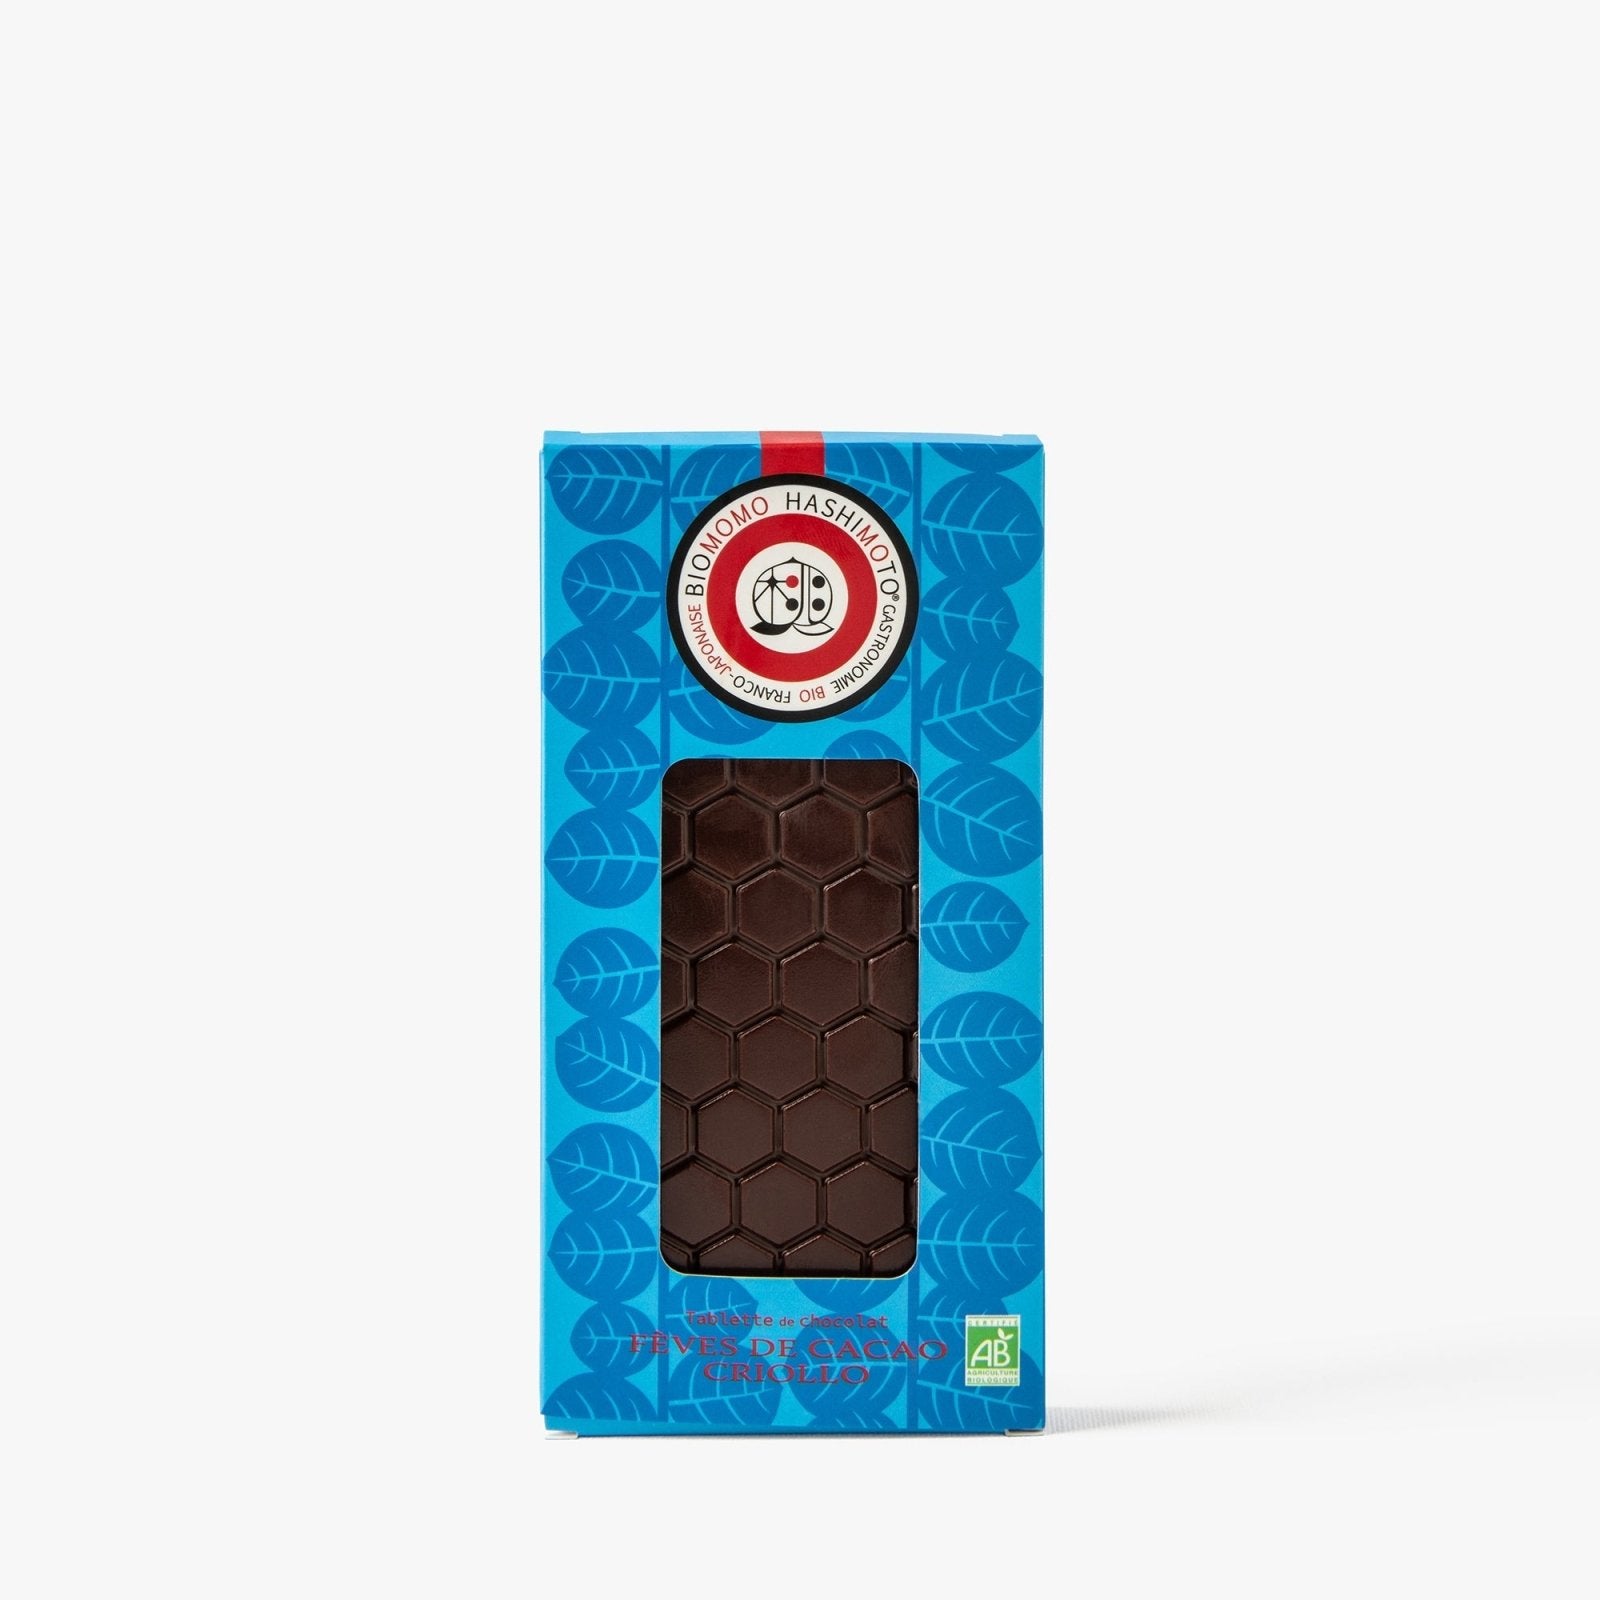 Tablette de chocolat fèves de cacao Criollo - 70g - Biomomo Hashimoto -iRASSHAi